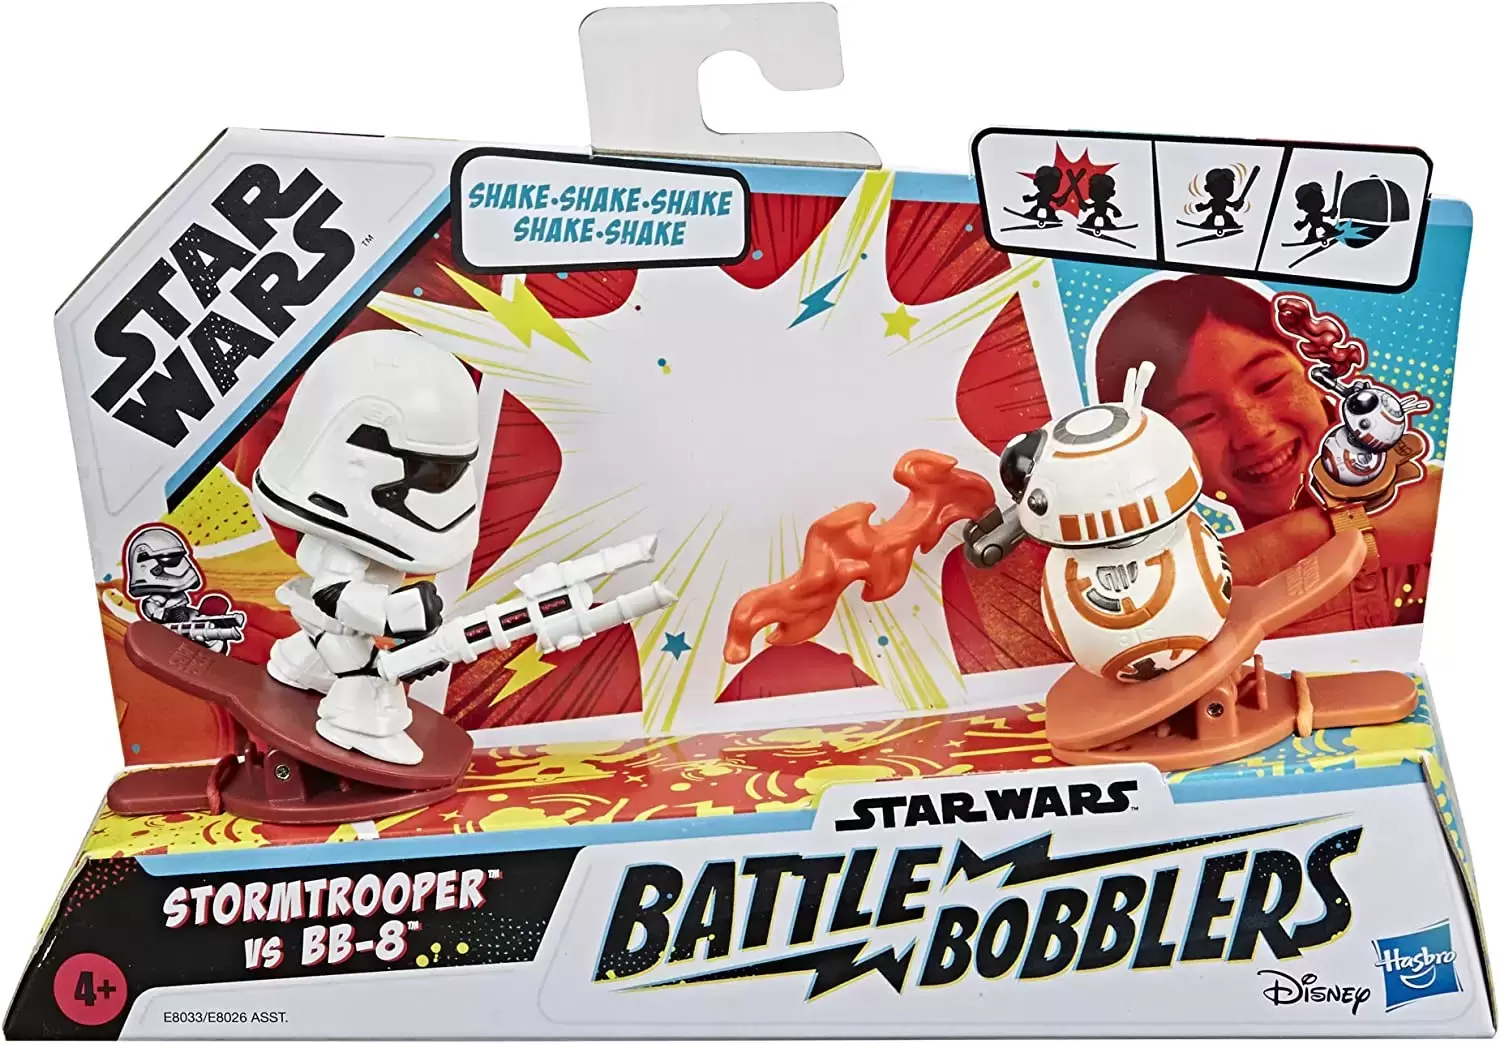 Star Wars Battle Bobblers - Stormtrooper vs BB-8